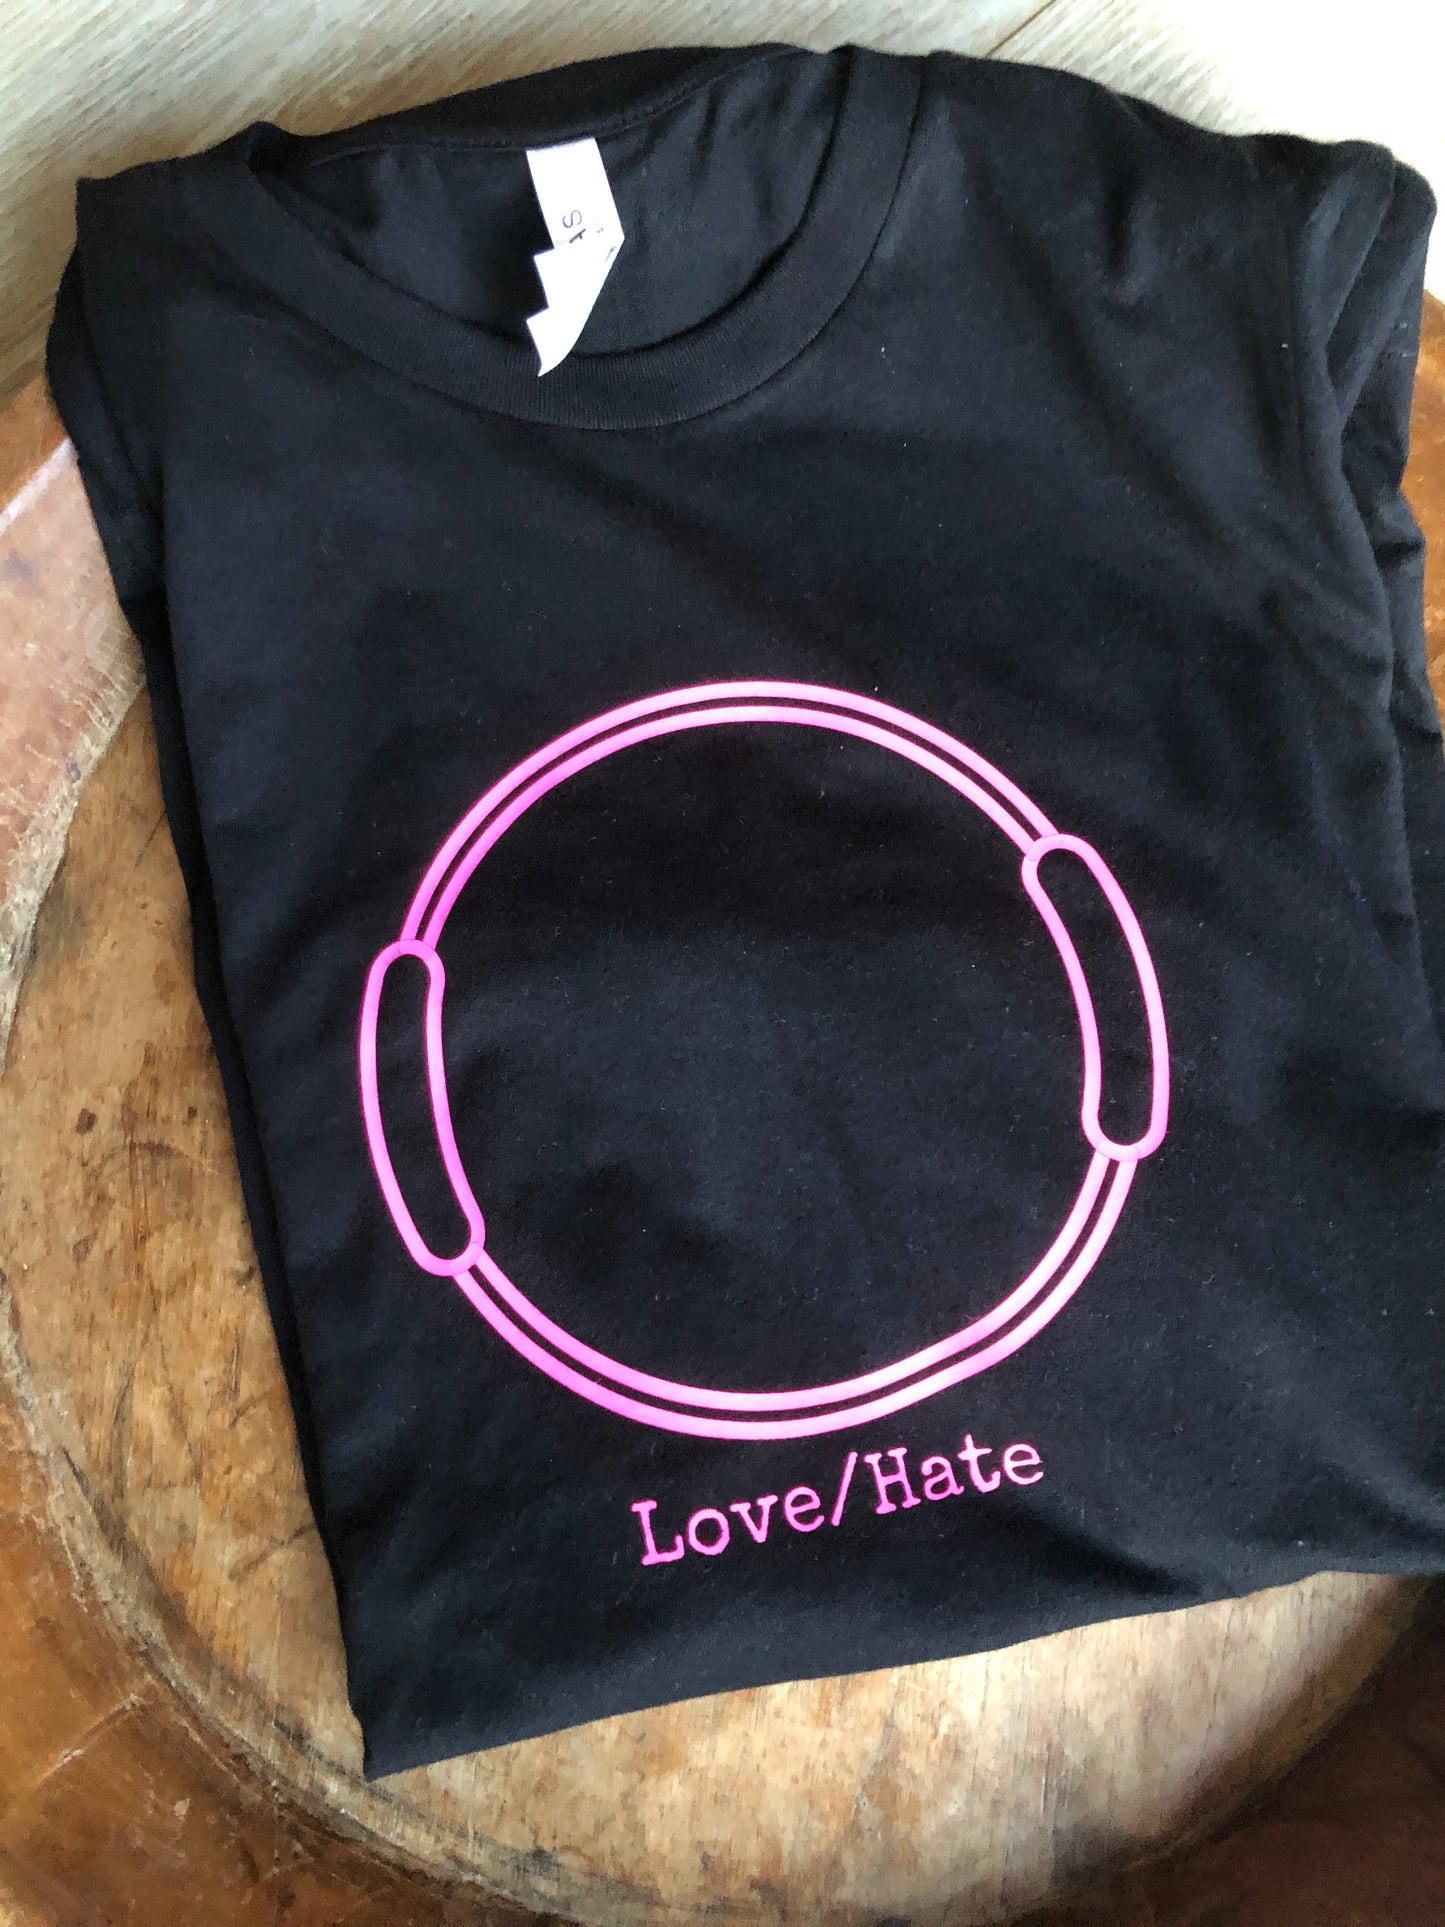 Pilates Ring Love/ Hate t-shirt